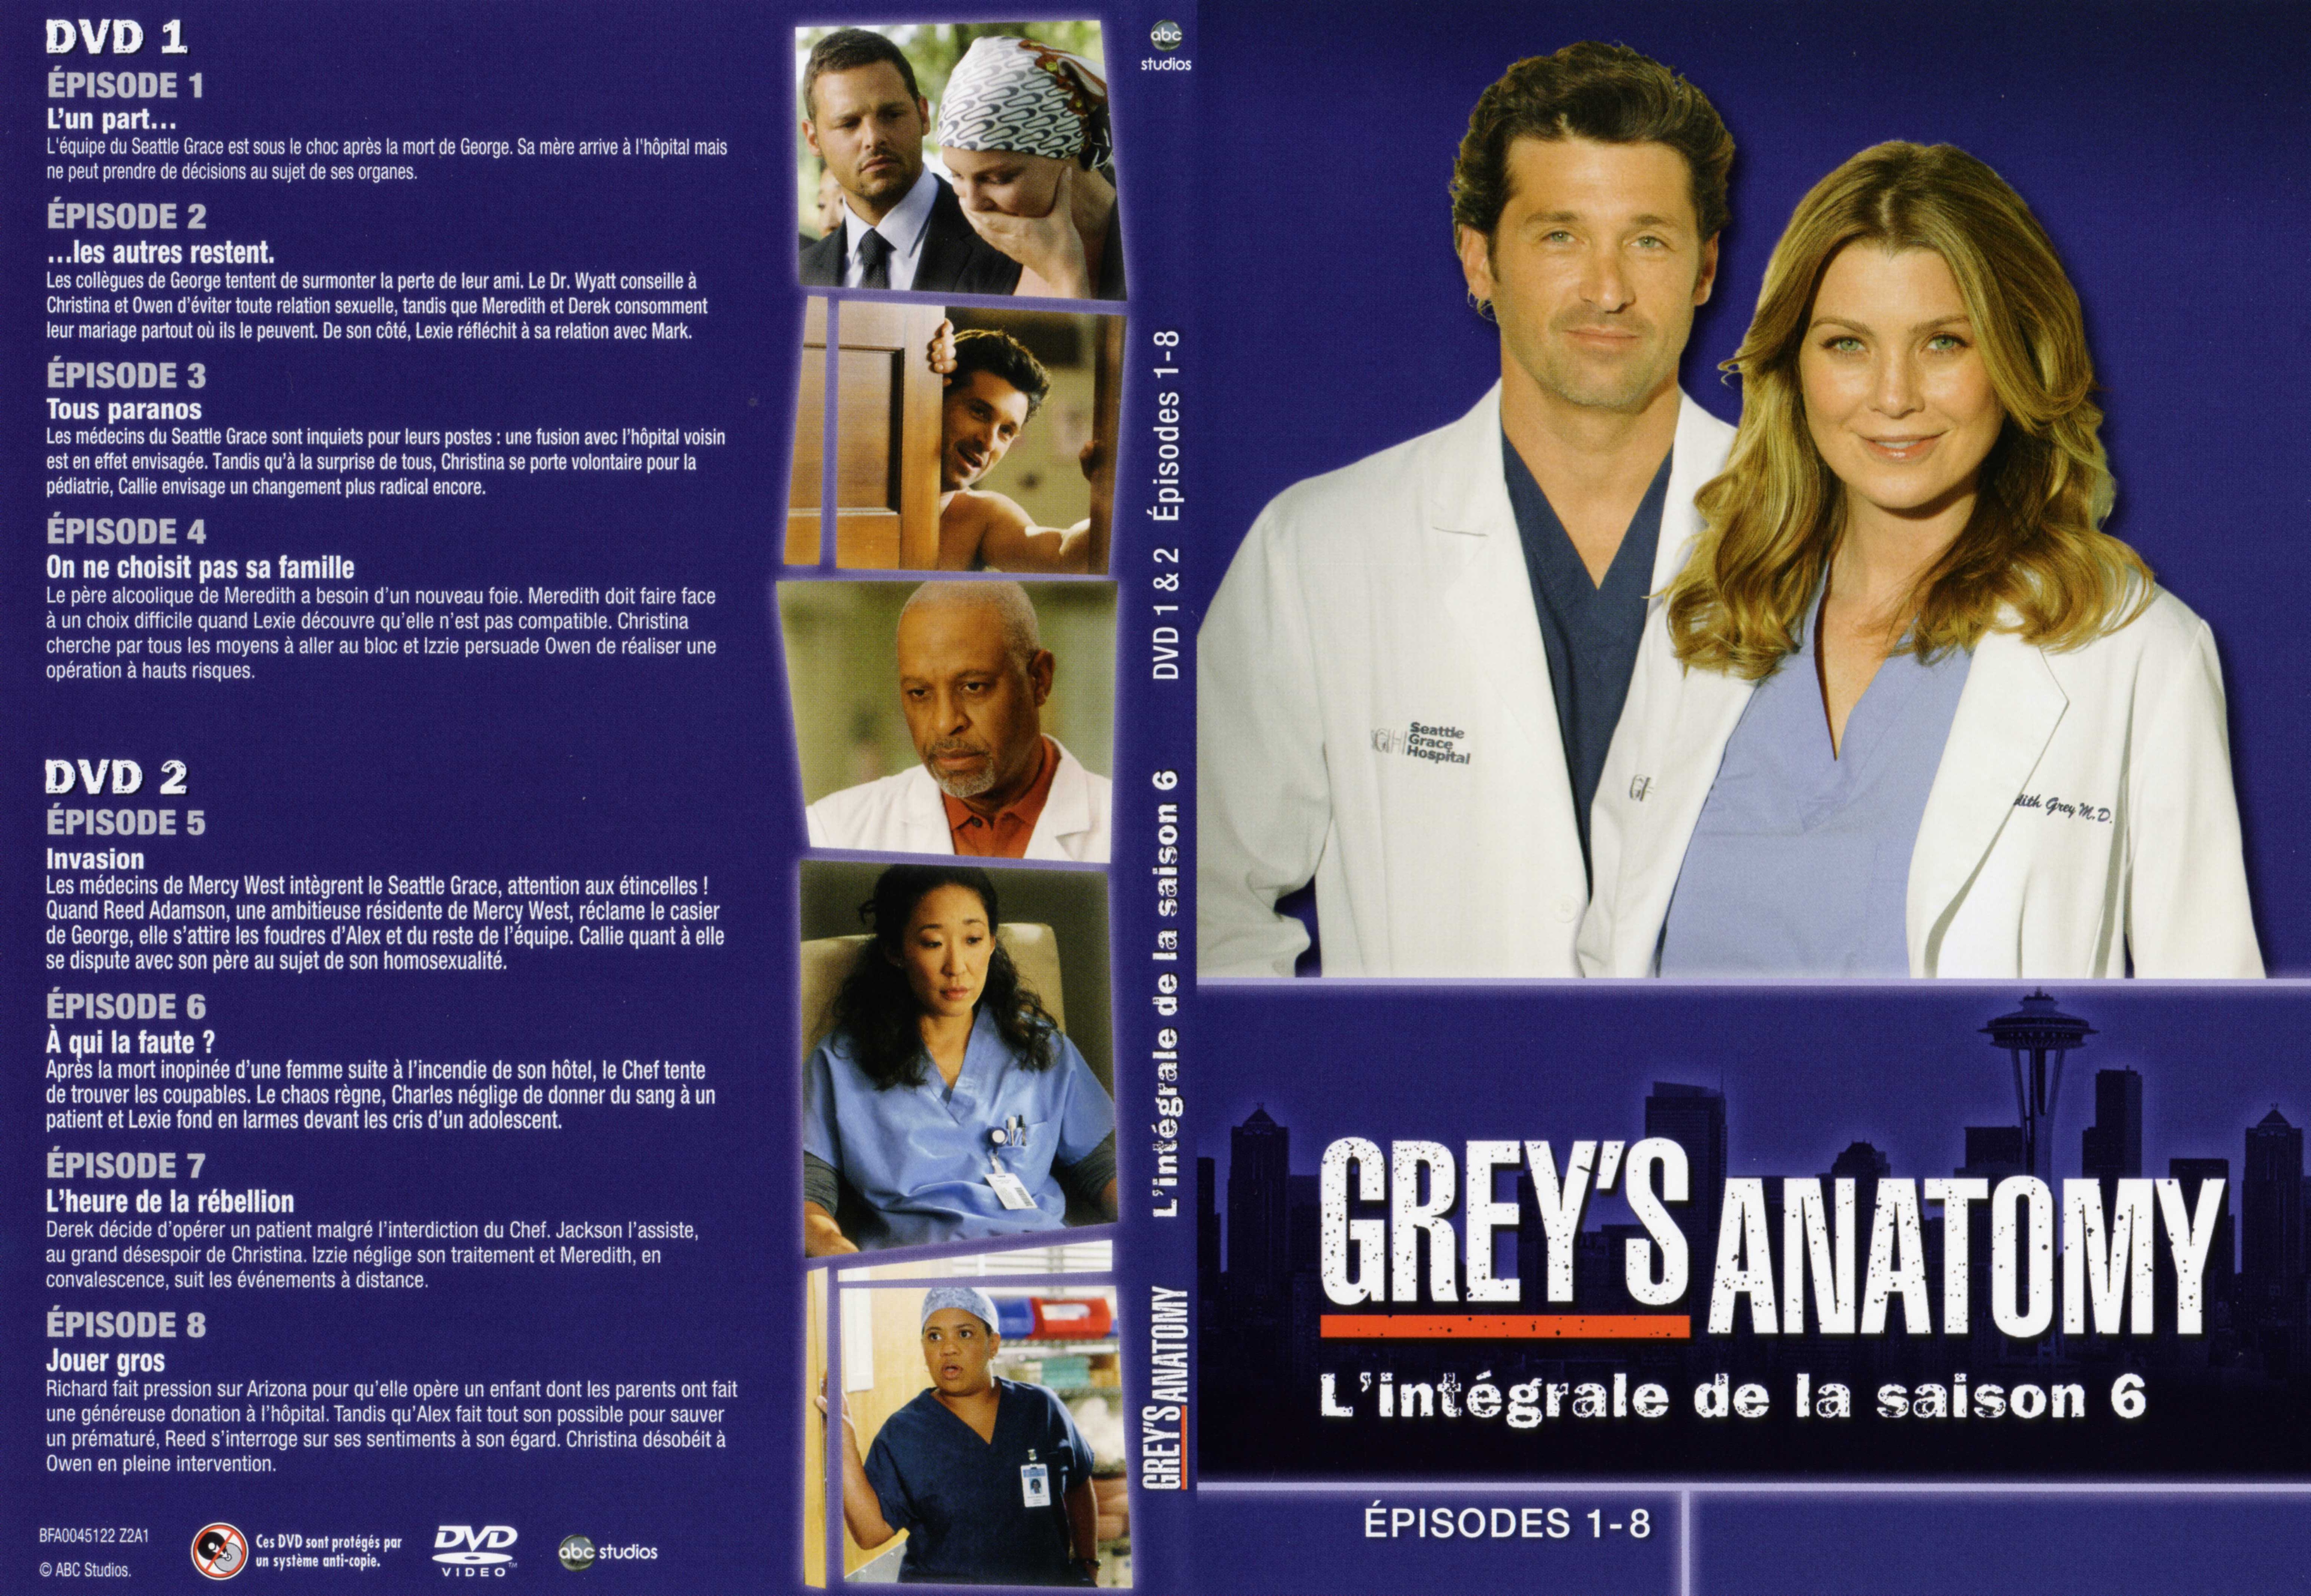 Greys Anatomy Saison 6 Complete French Torrent.rar